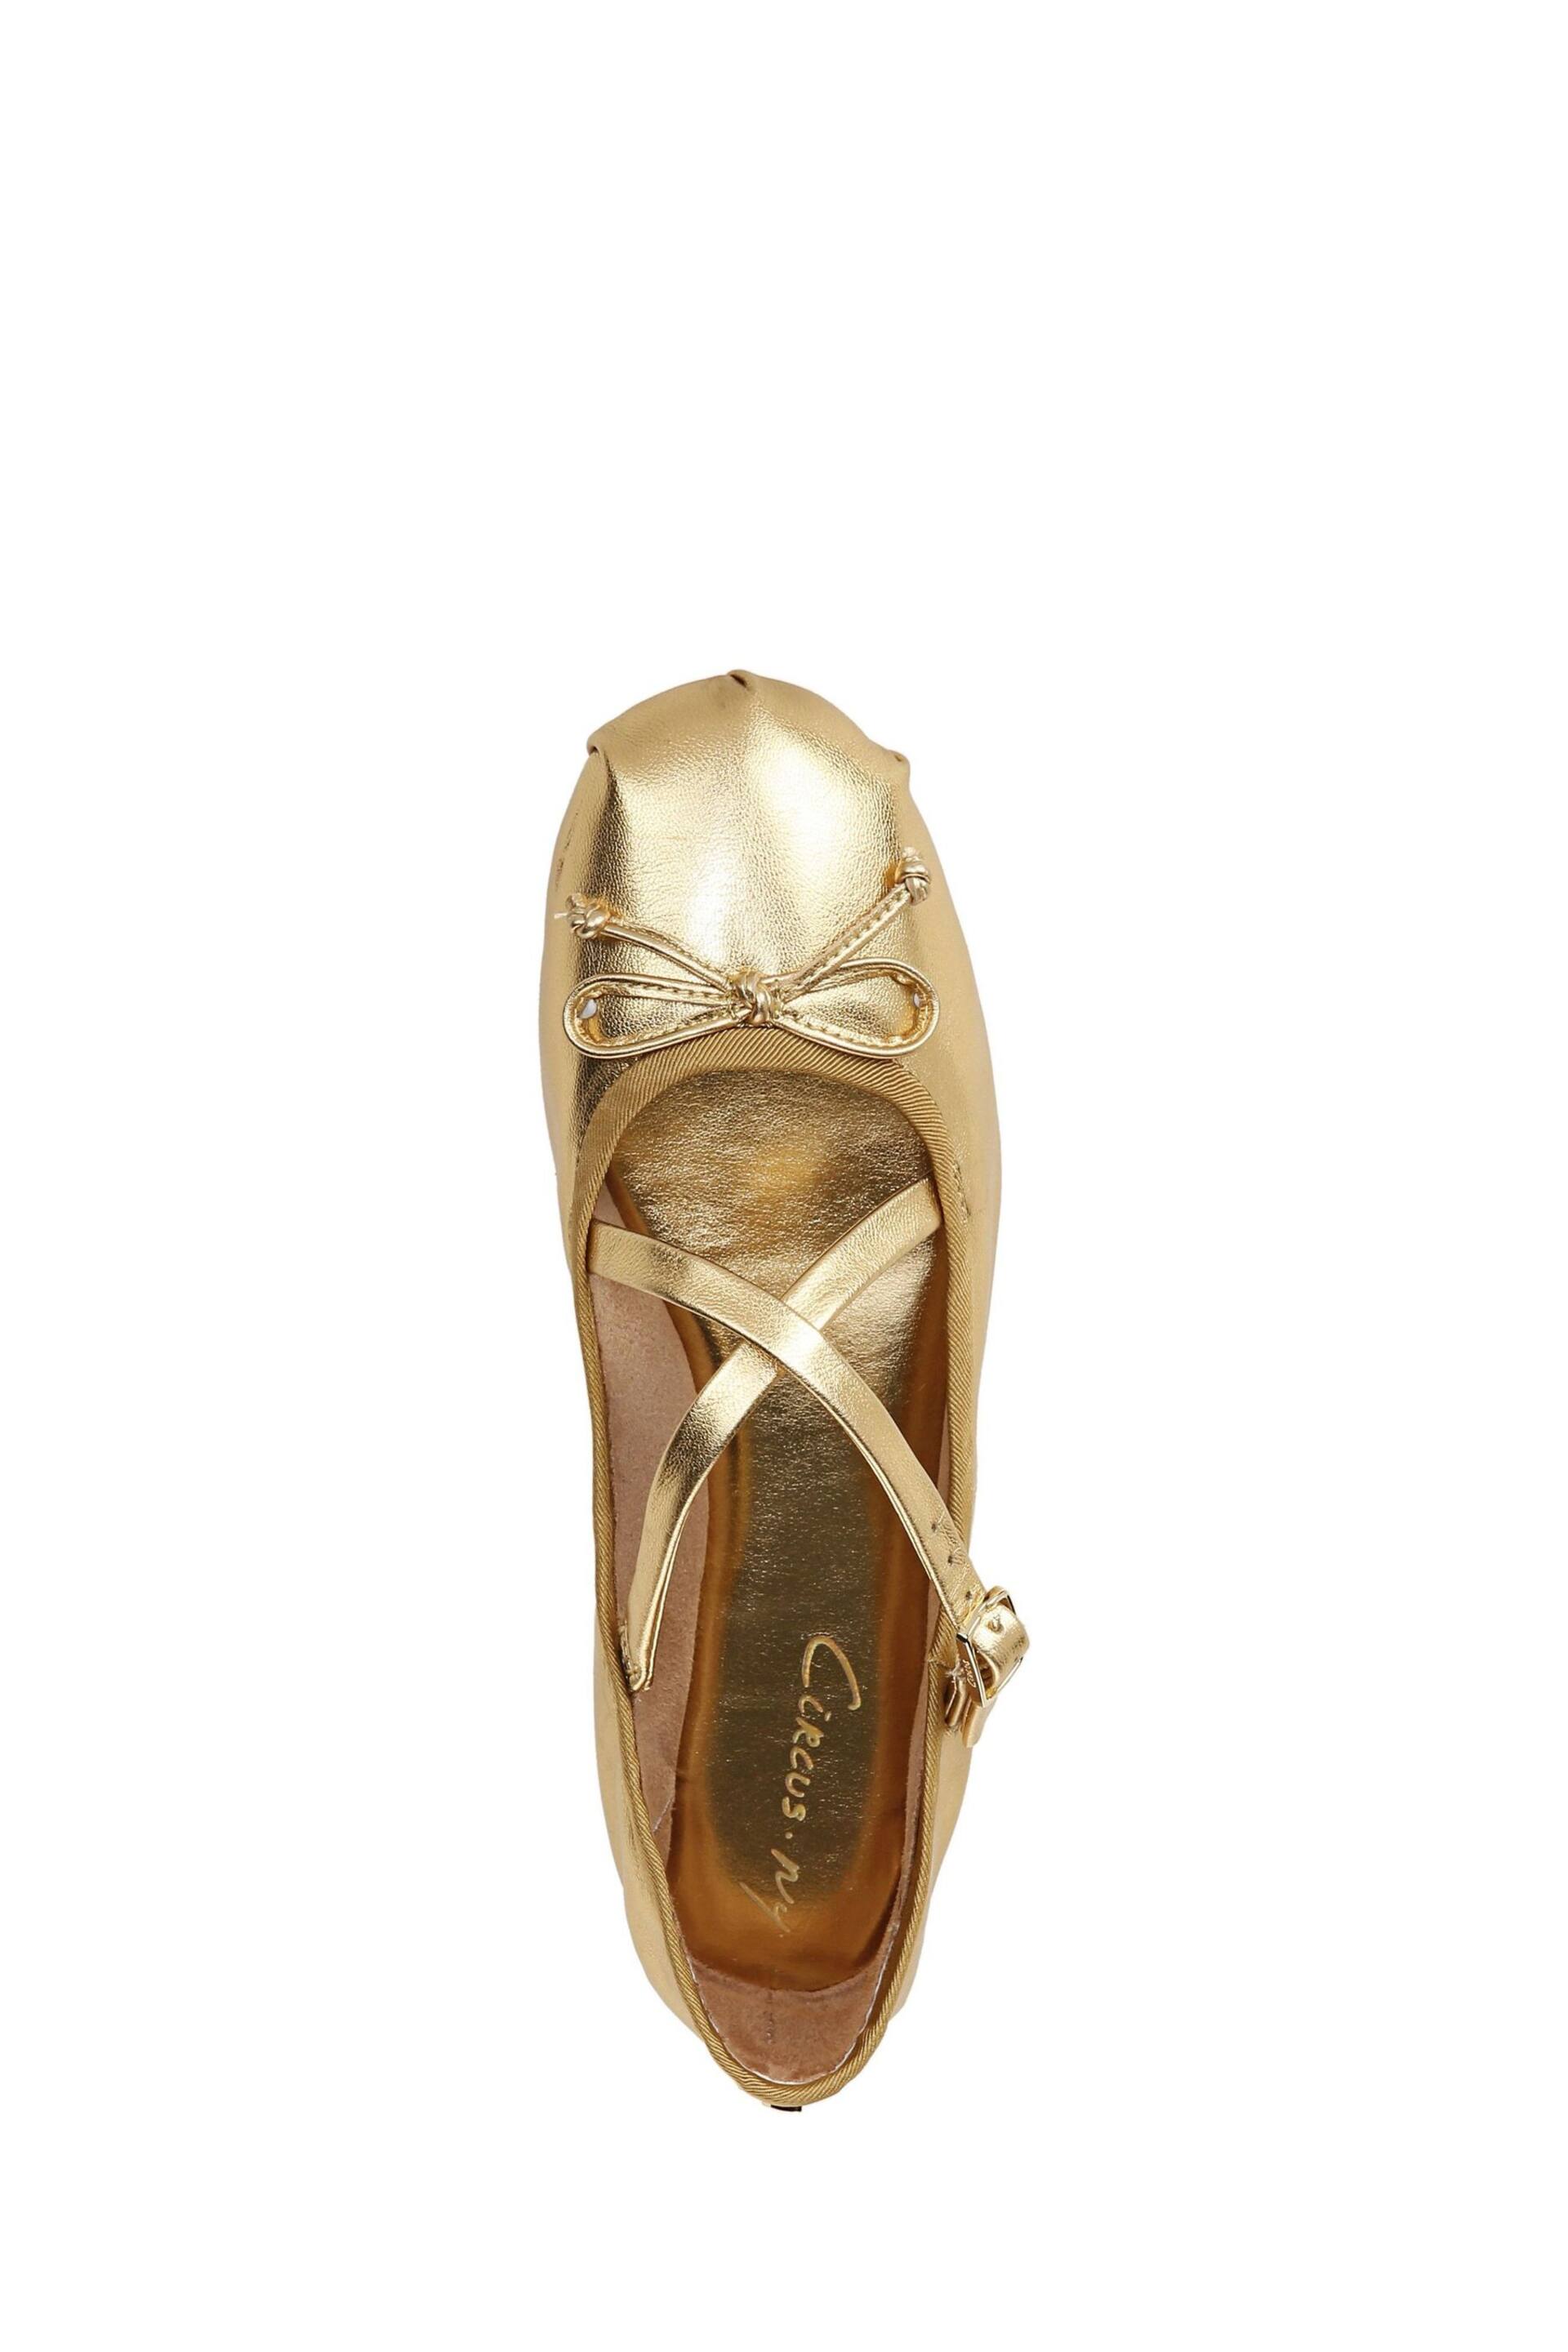 Circus NY Gold Zuri Ballerina Shoes - Image 6 of 7